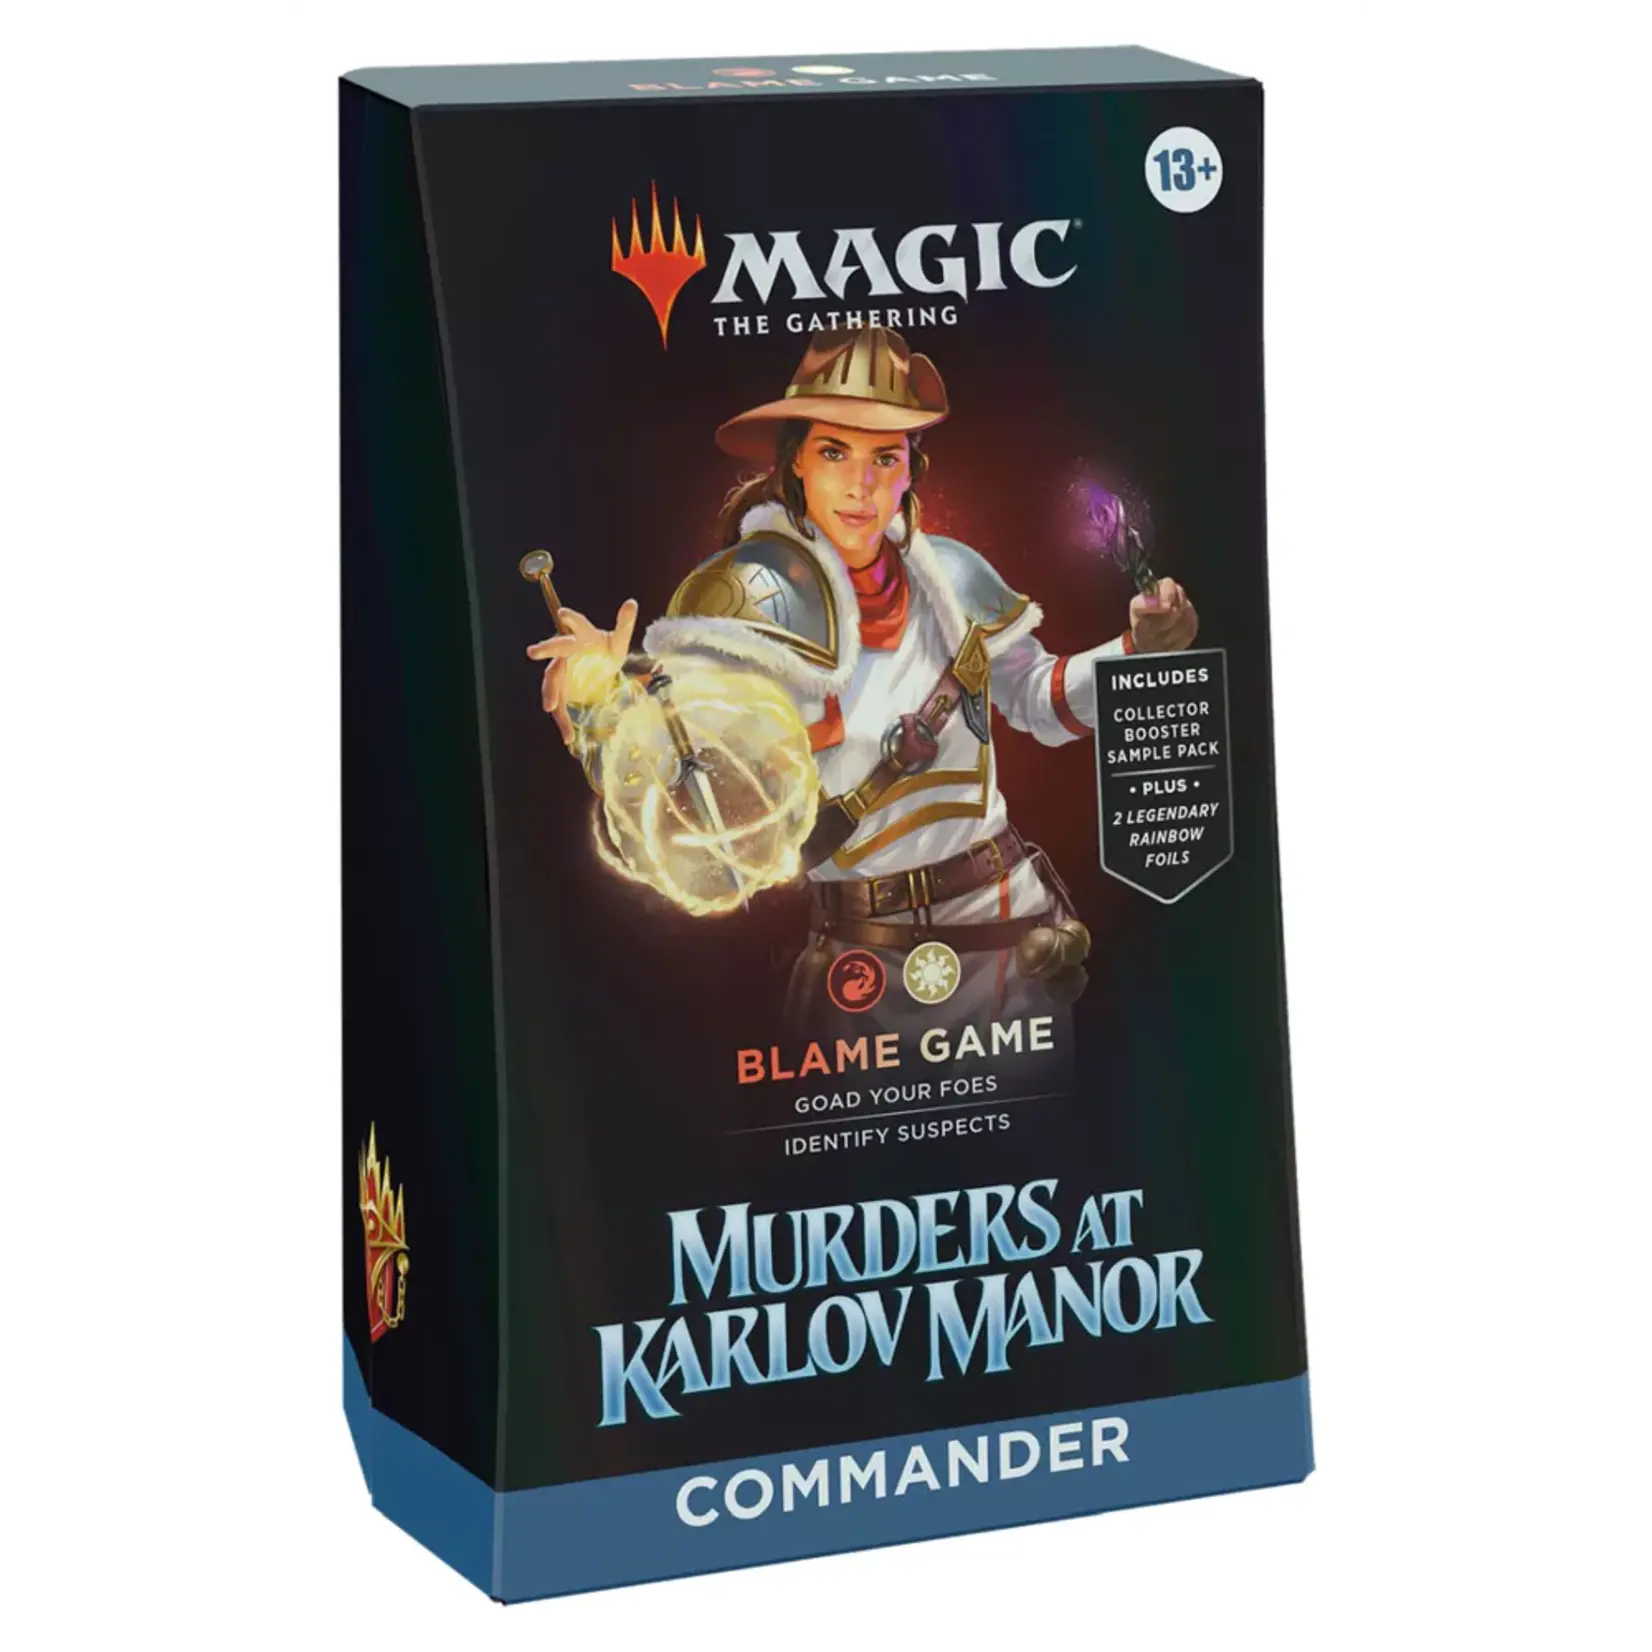 Magic the gathering Murders at karlov manor: Blame Game - Commander deck